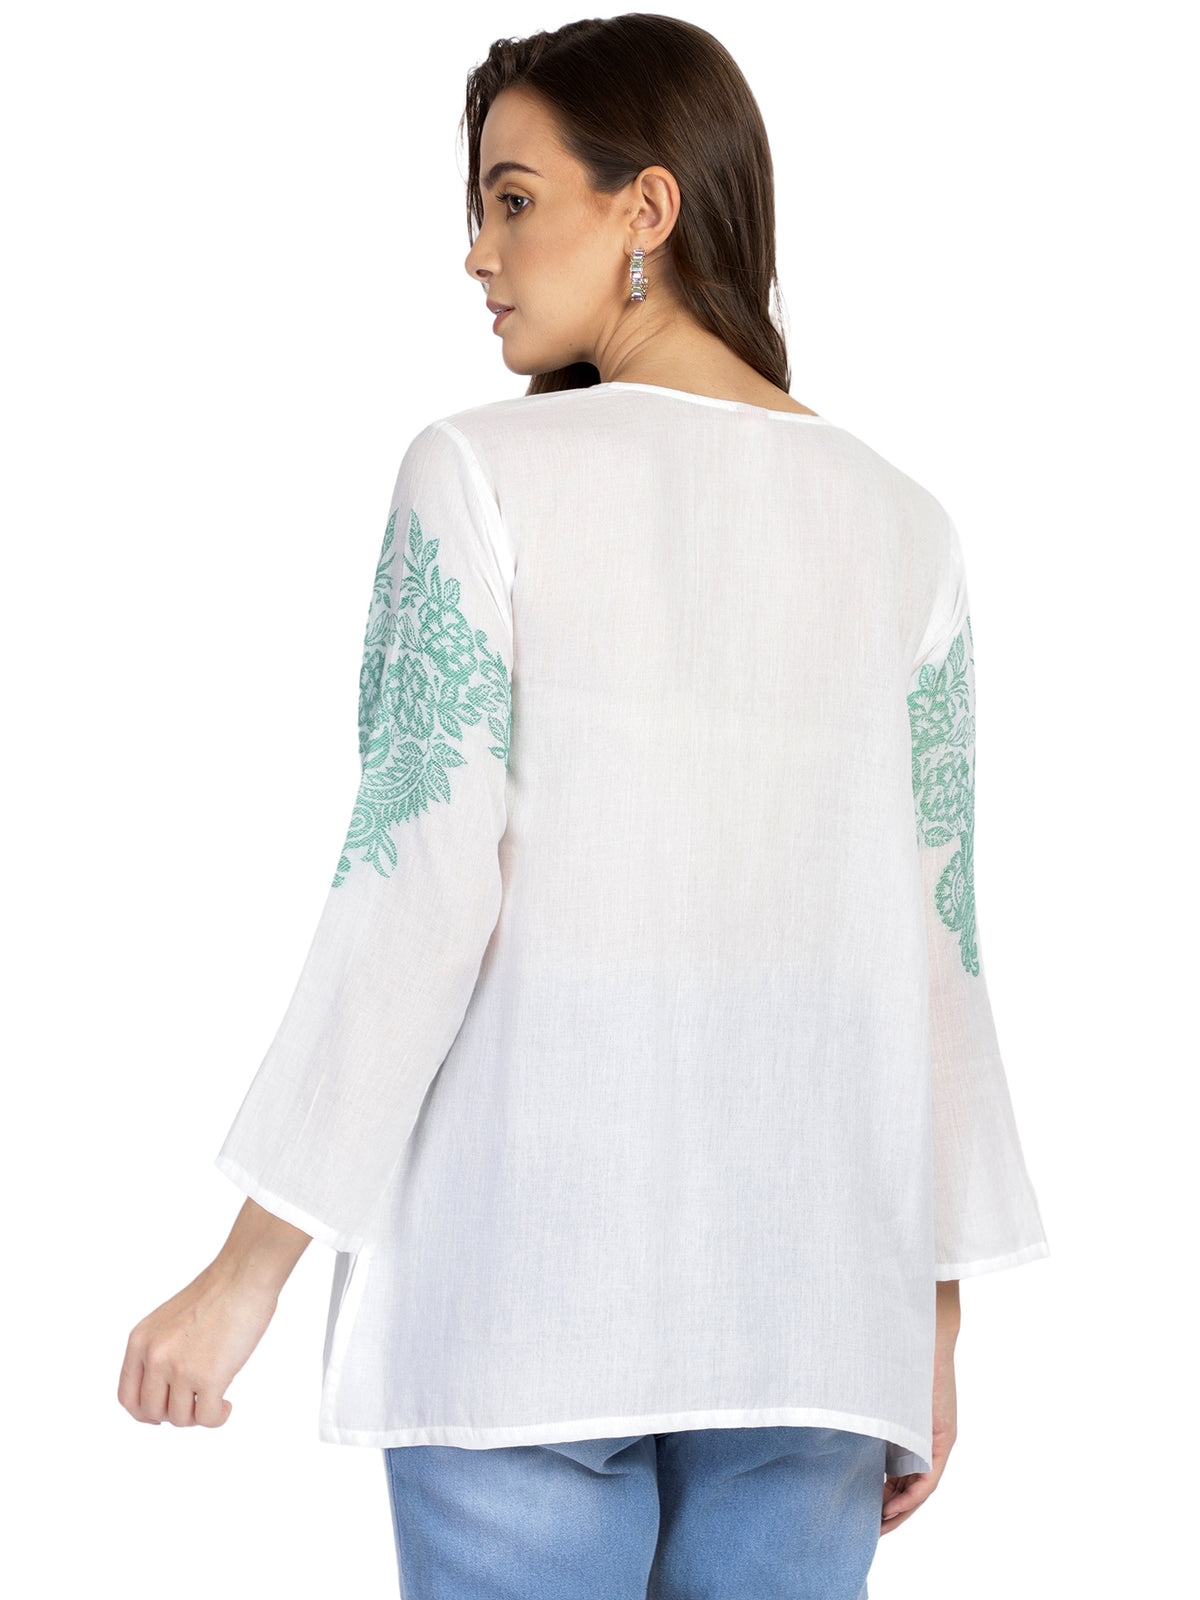 Embroidered white semi-sheer cotton tunic